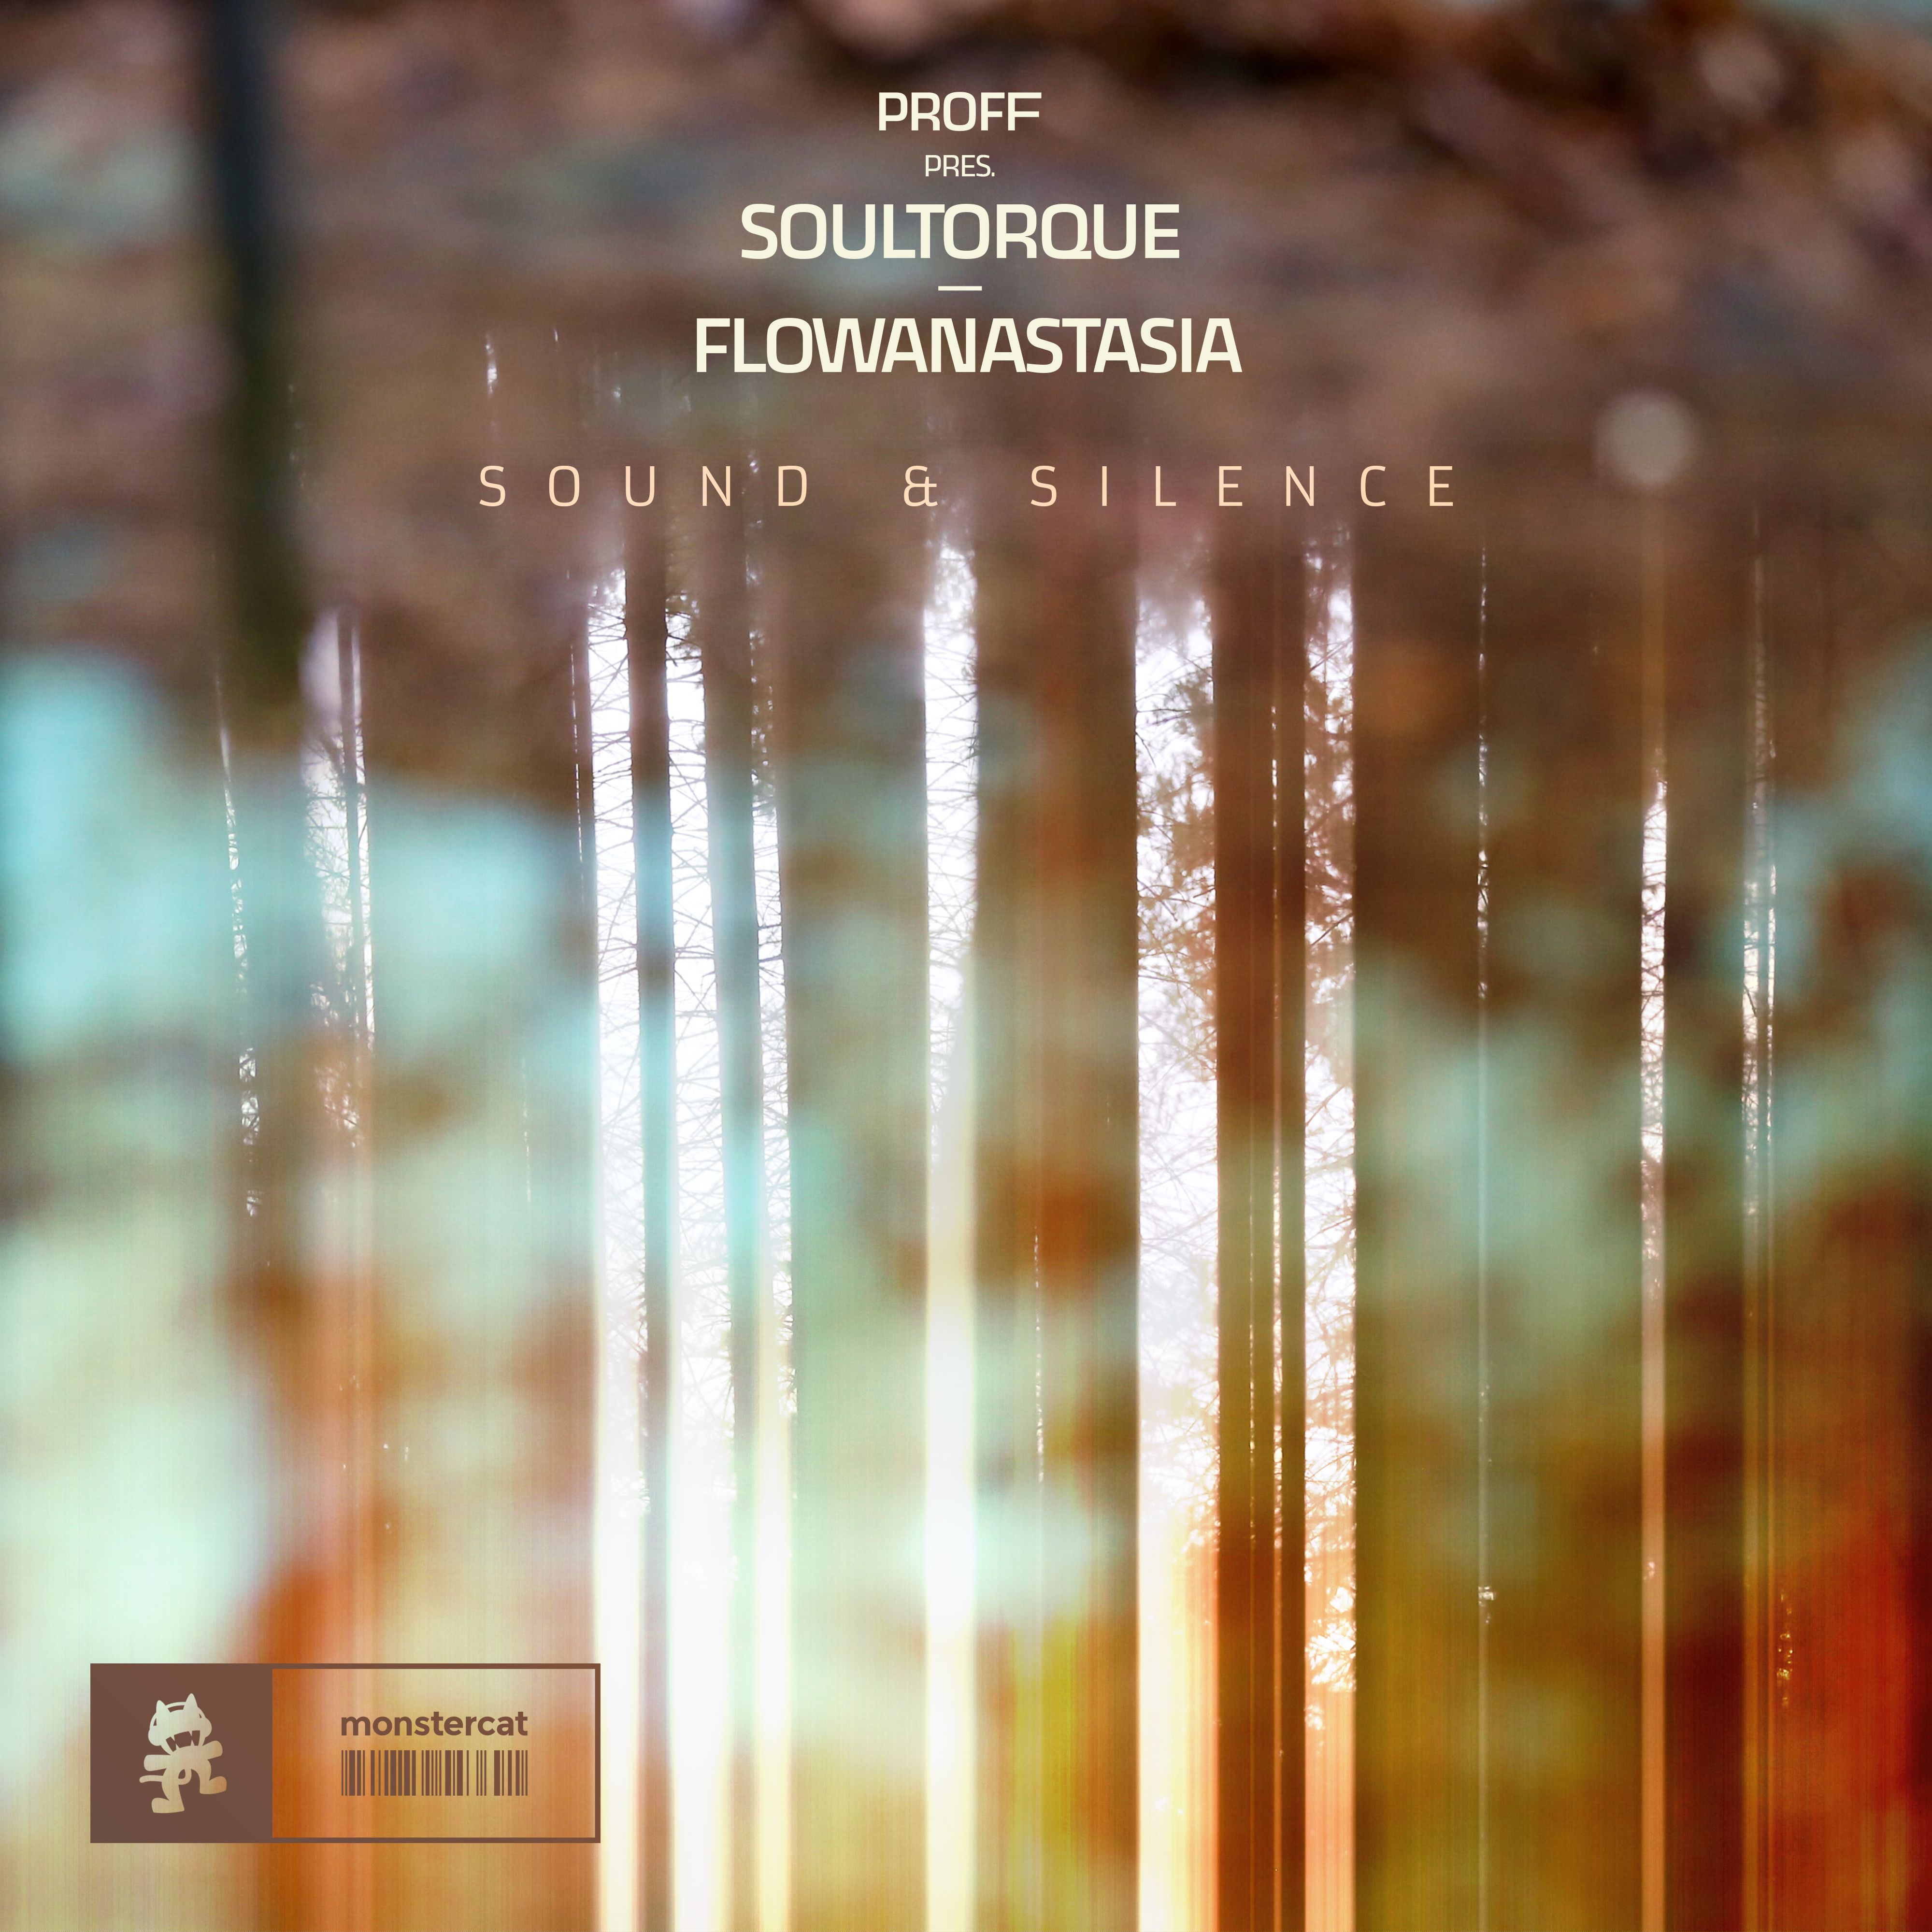 PROFF Pres. Soultorque & flowanastasia  - Sound & Silence